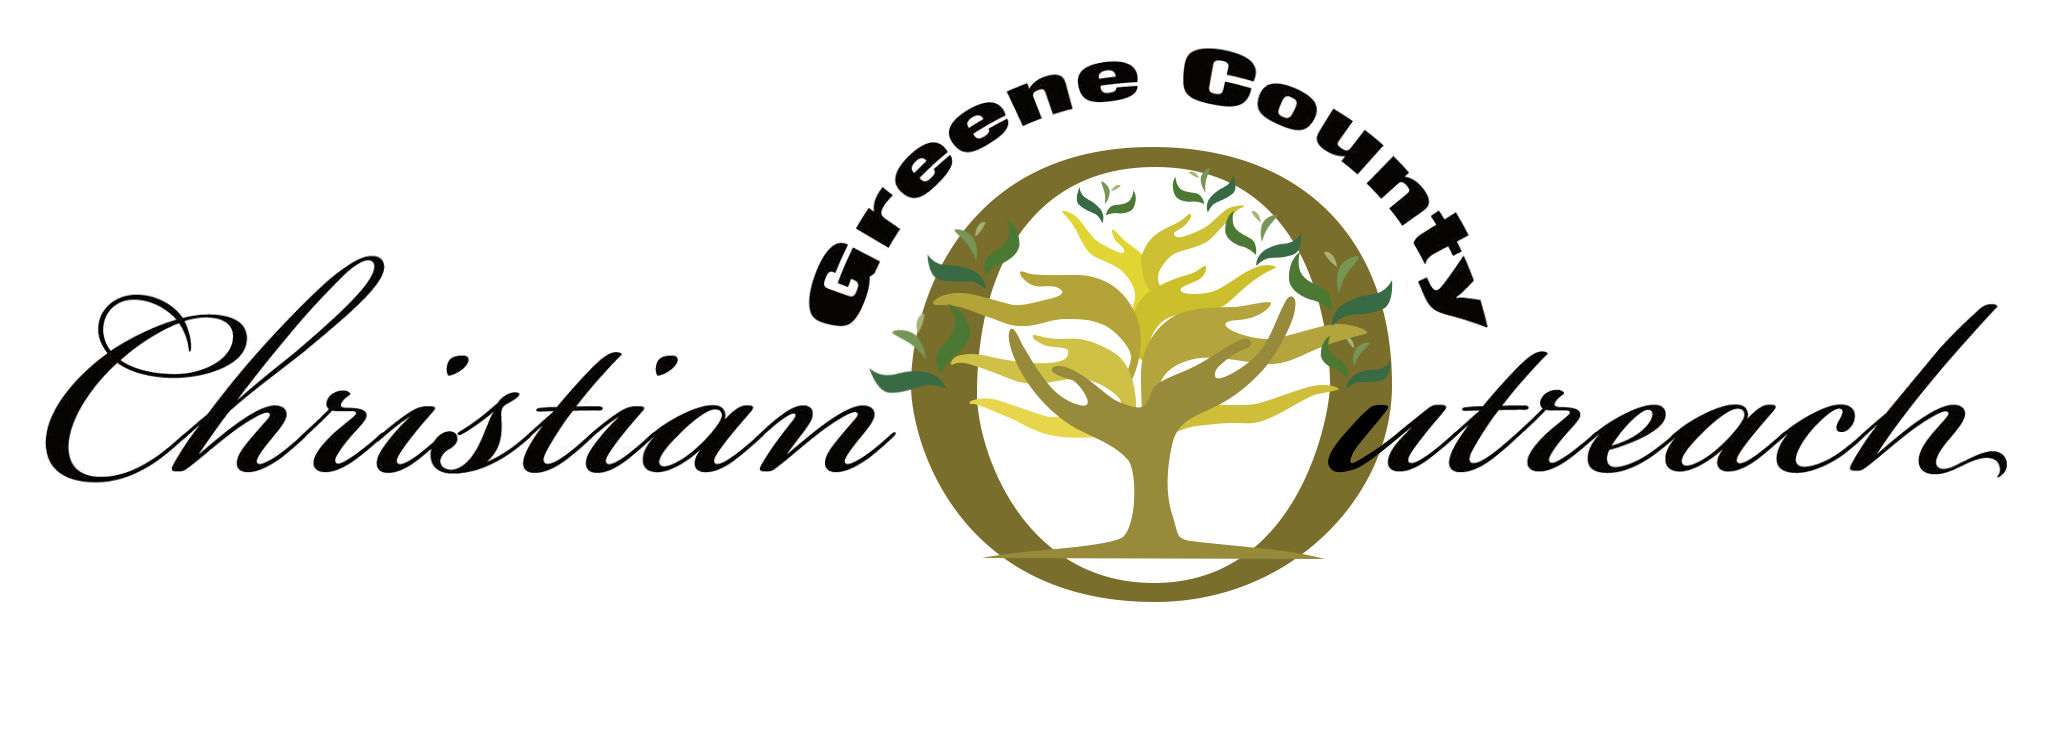 Greene County Outreach